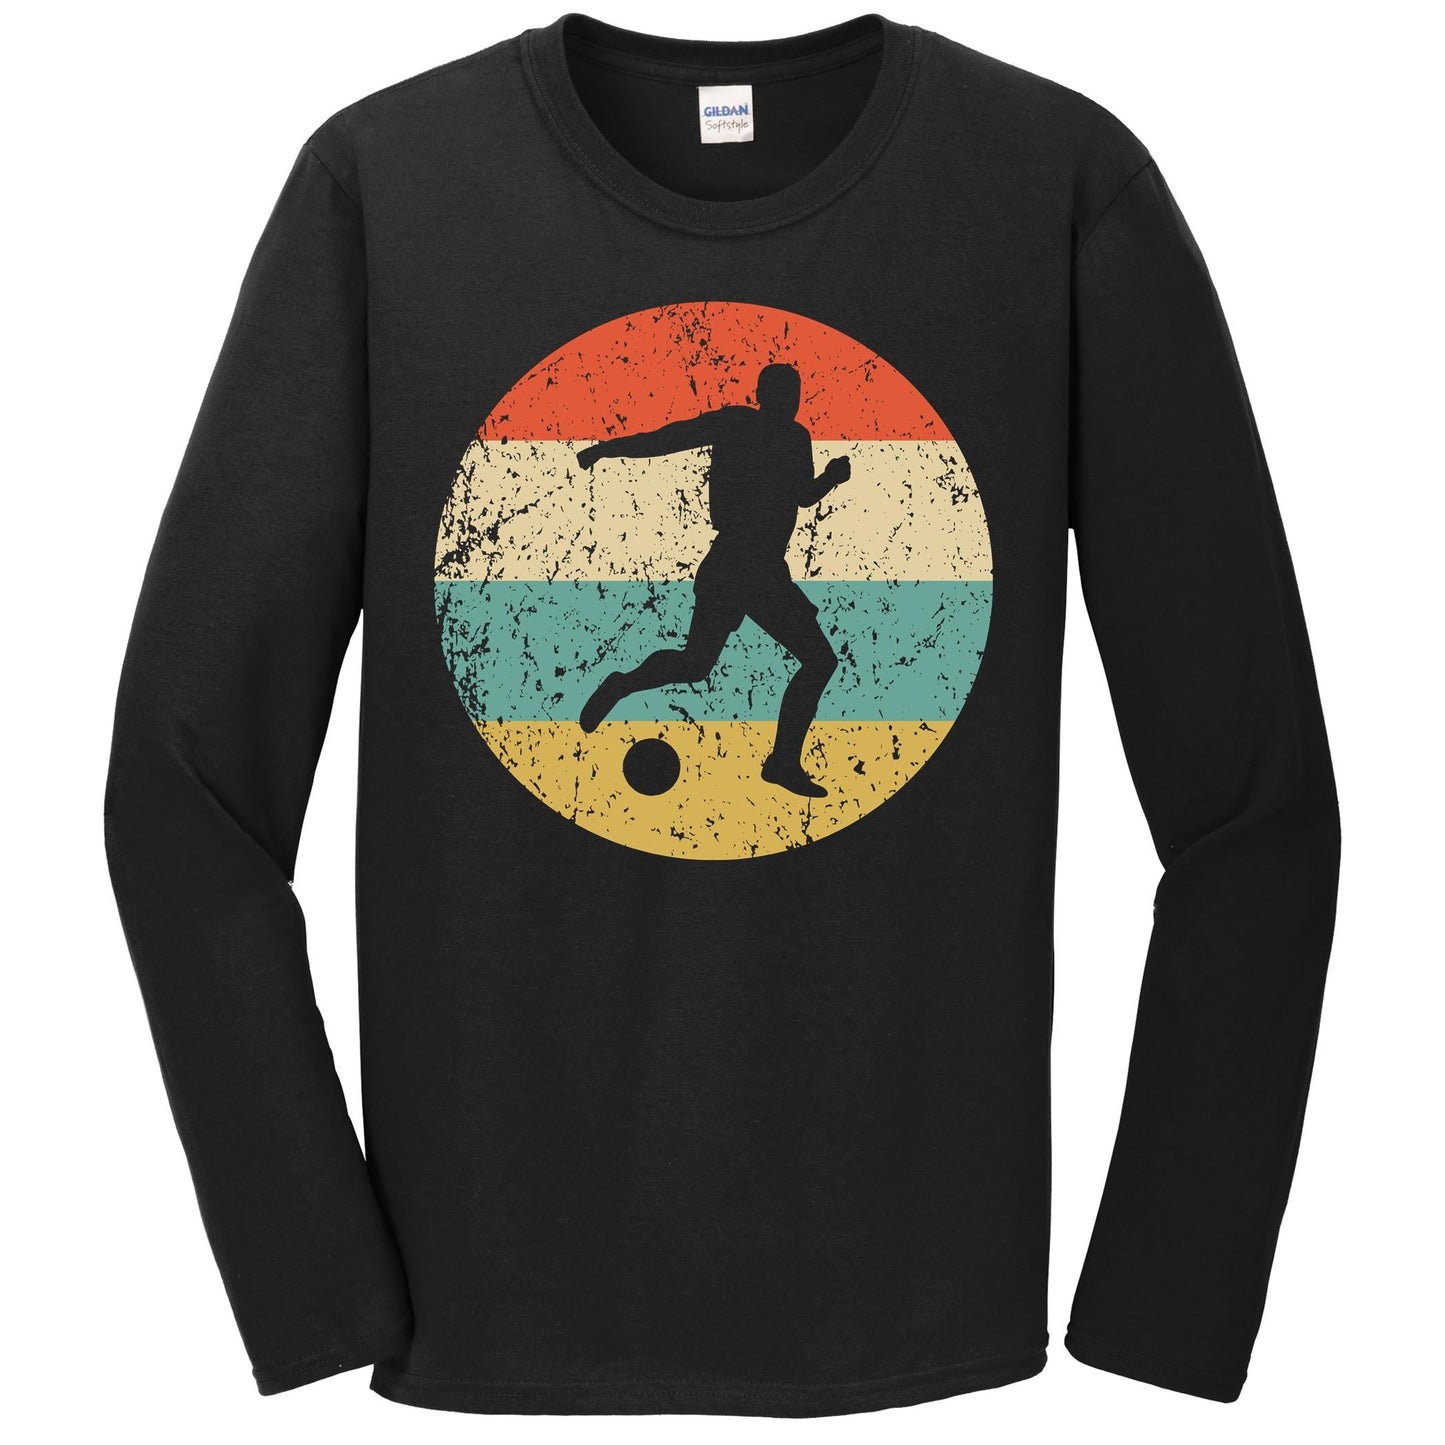 Soccer Shirt - Vintage Retro Soccer Player Long Sleeve T-Shirt